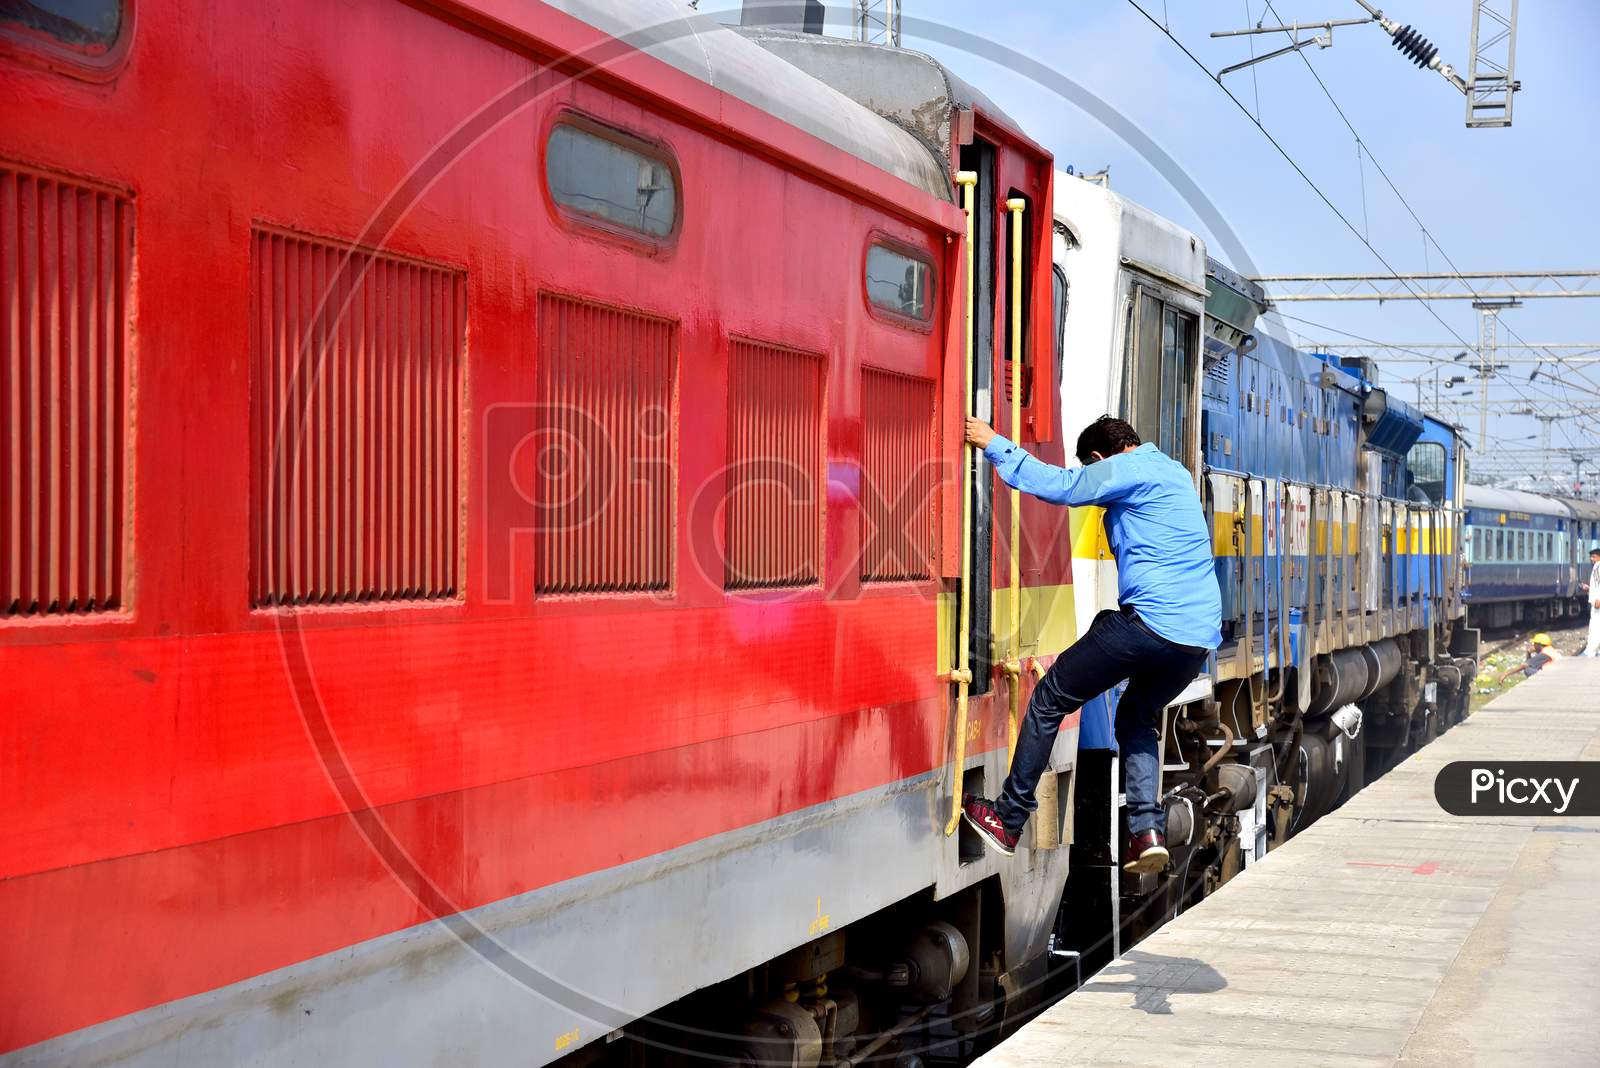 A Man Boarding a Running Train From a Railway Station Platform